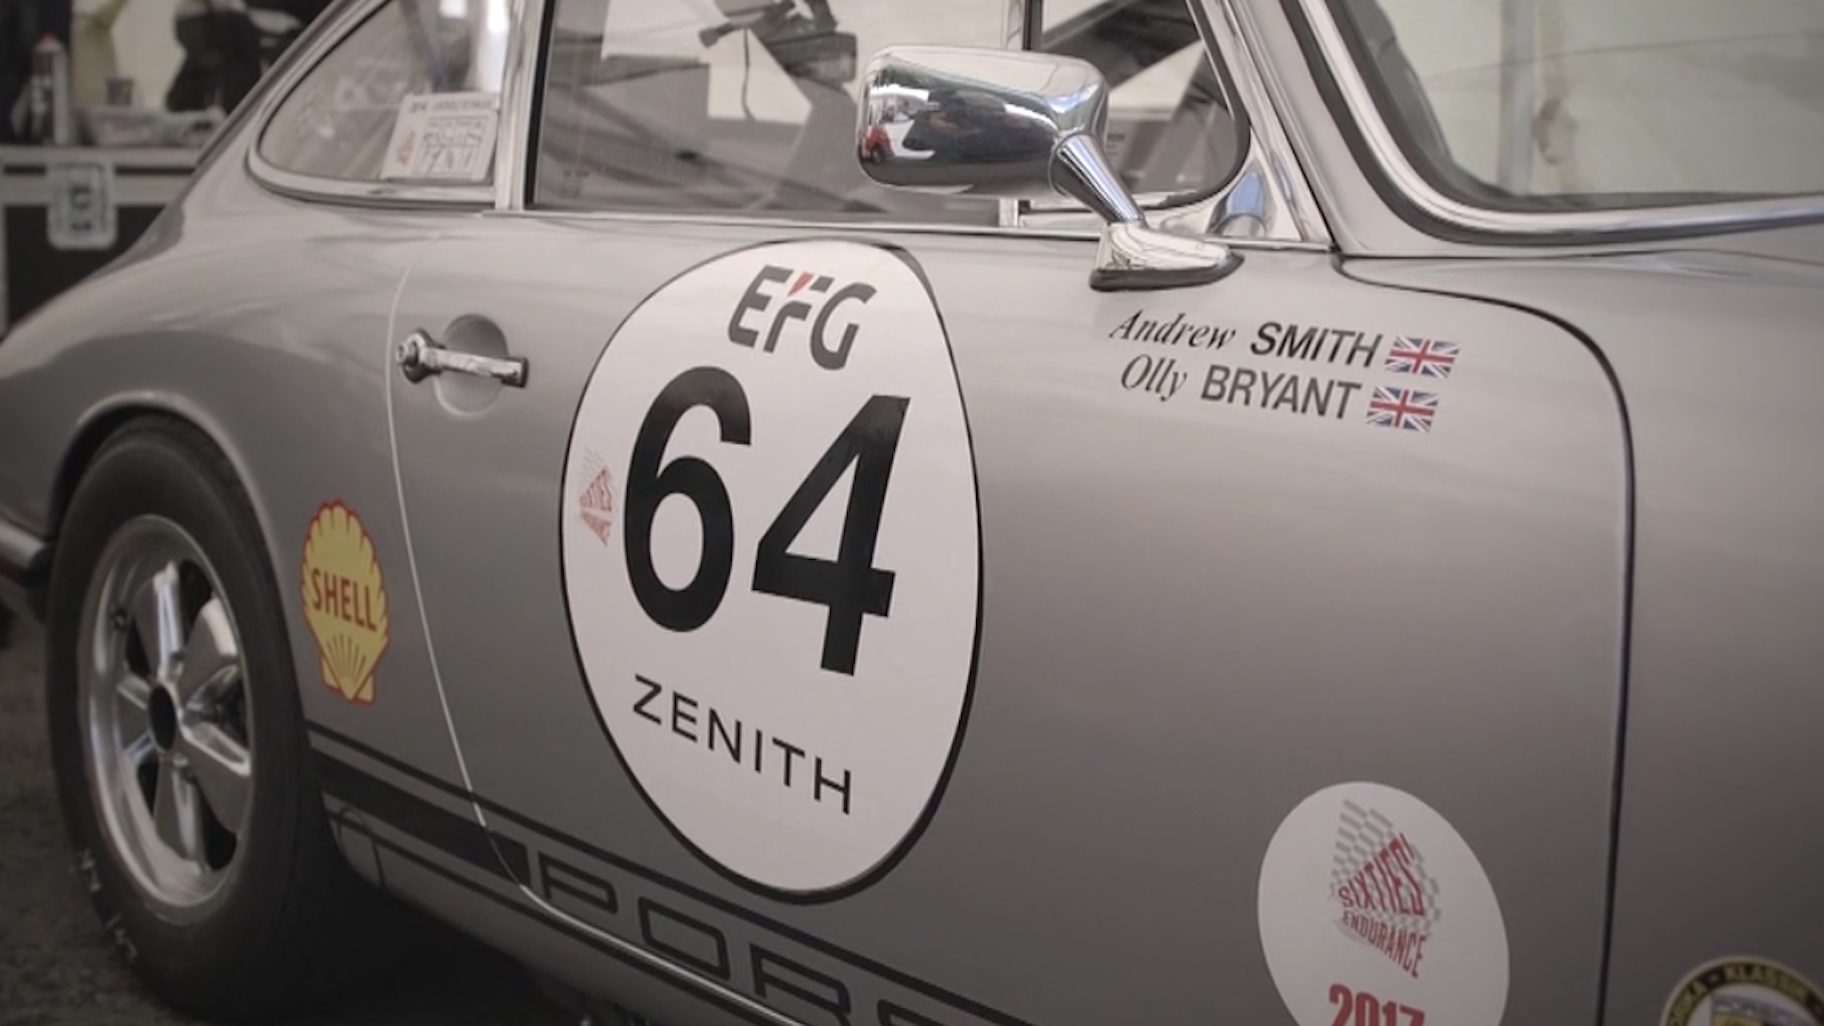 Historika Porsche: Spa Classic -